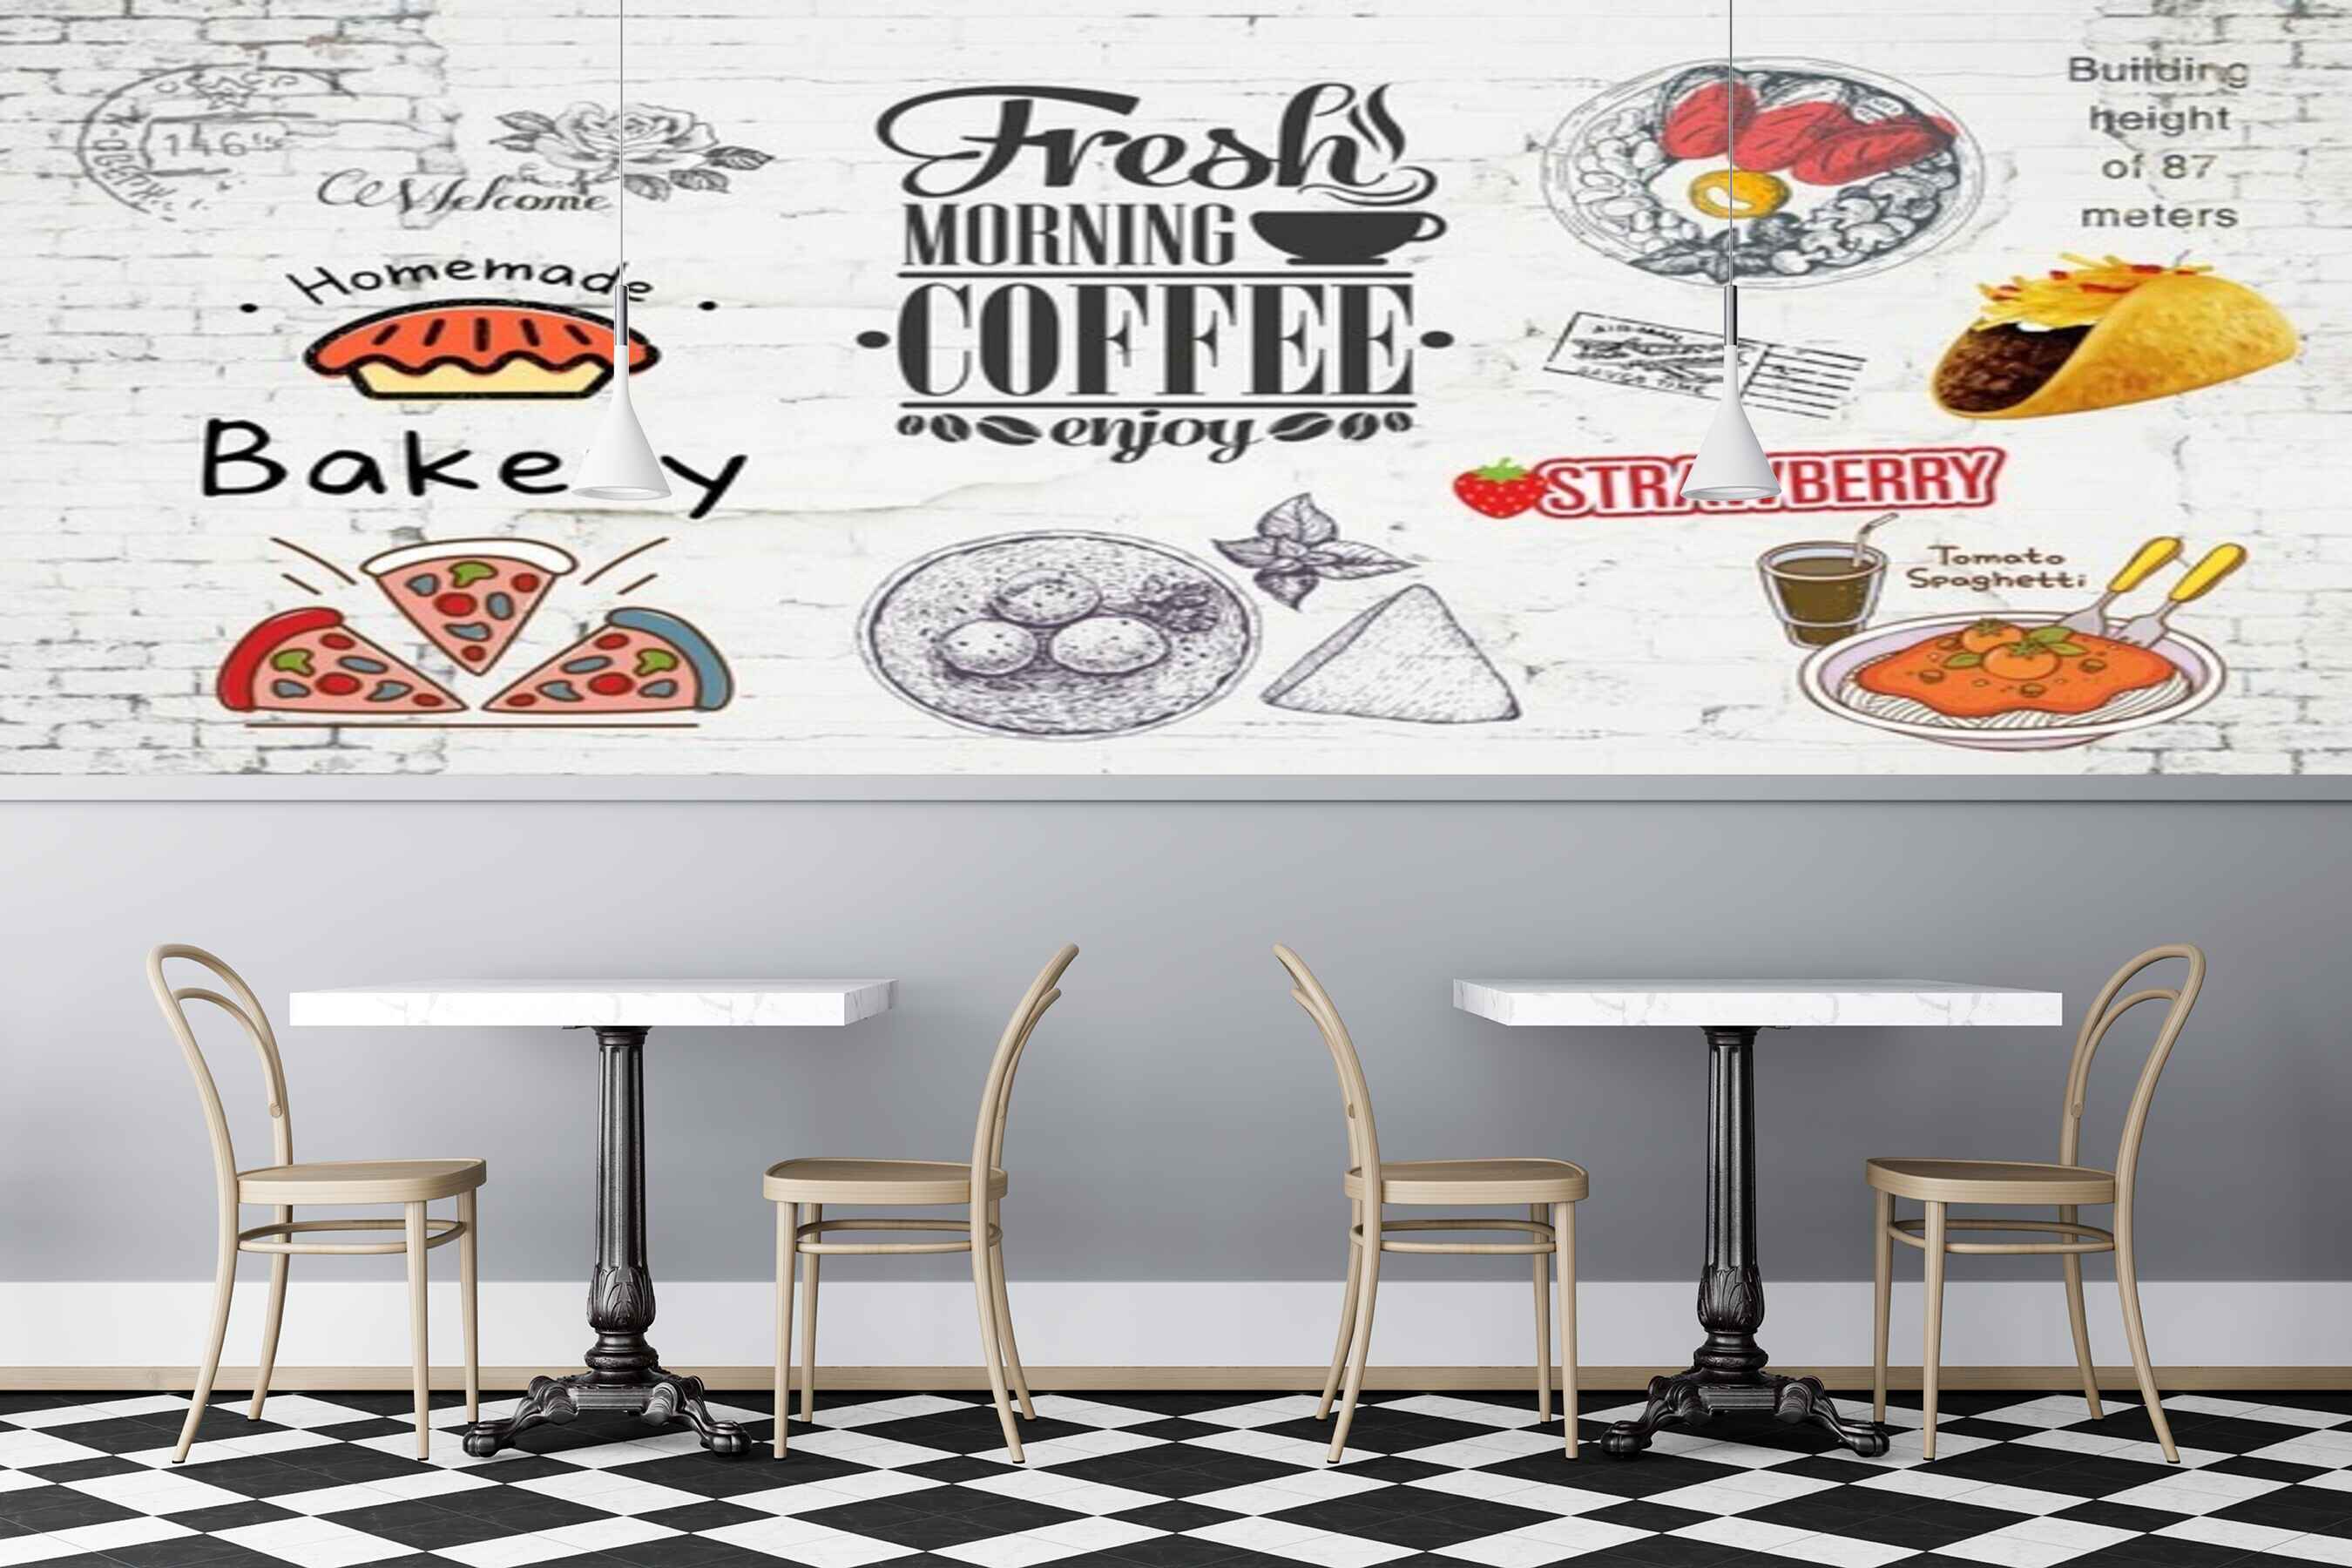 Avikalp MWZ3002 Bakery Coffee Pizza Strawberry HD Wallpaper for Cafe Restaurant